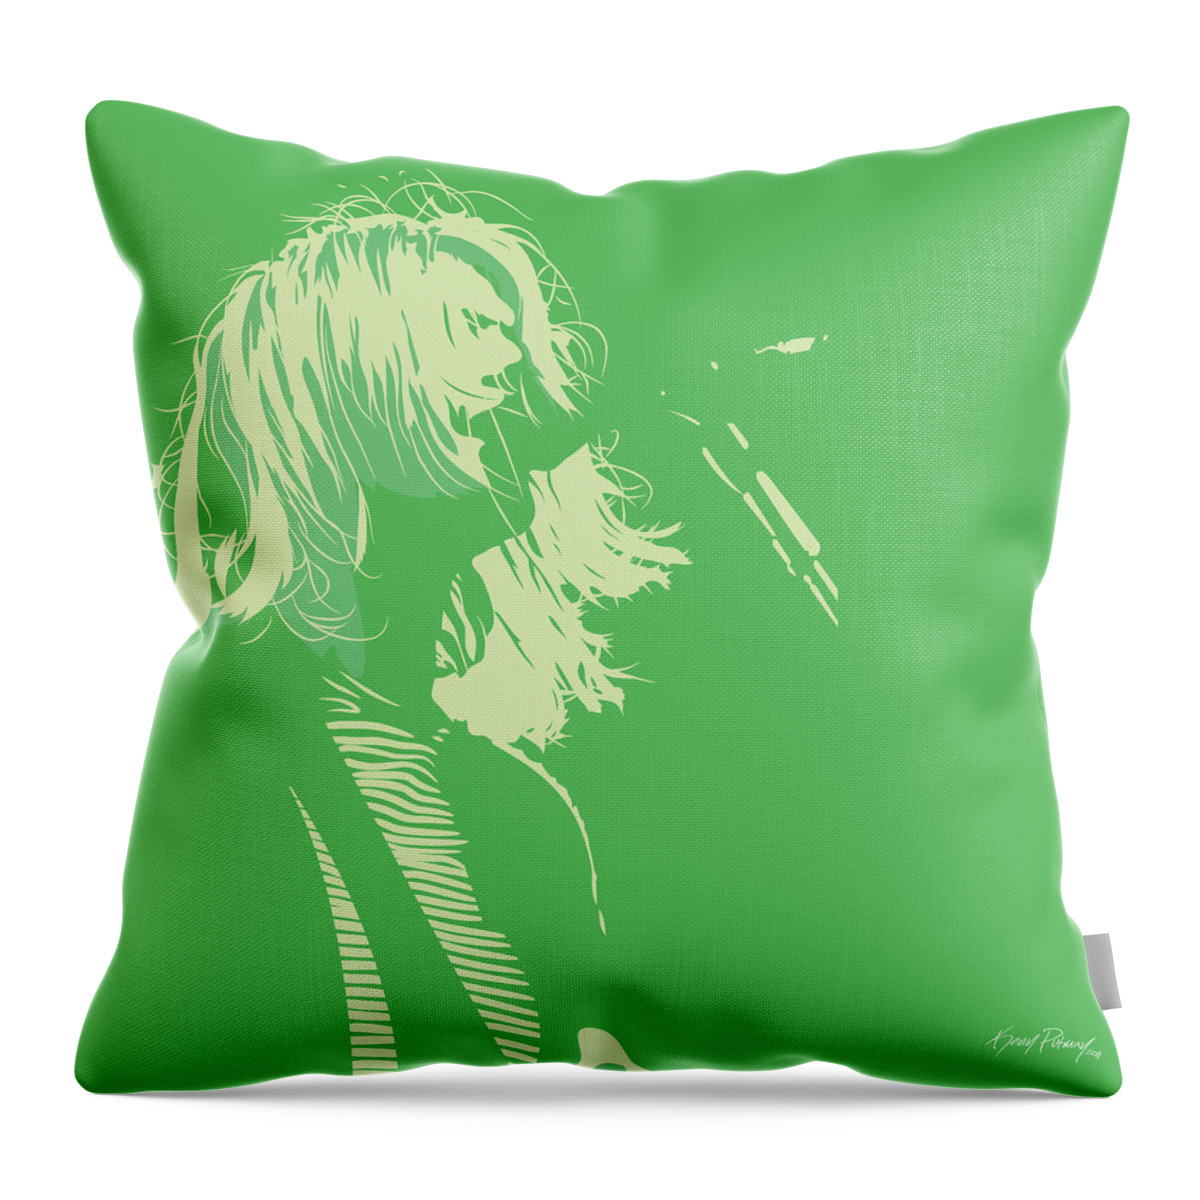 Kurt Cobain Throw Pillow featuring the digital art Kurt Cobain by Kevin Putman